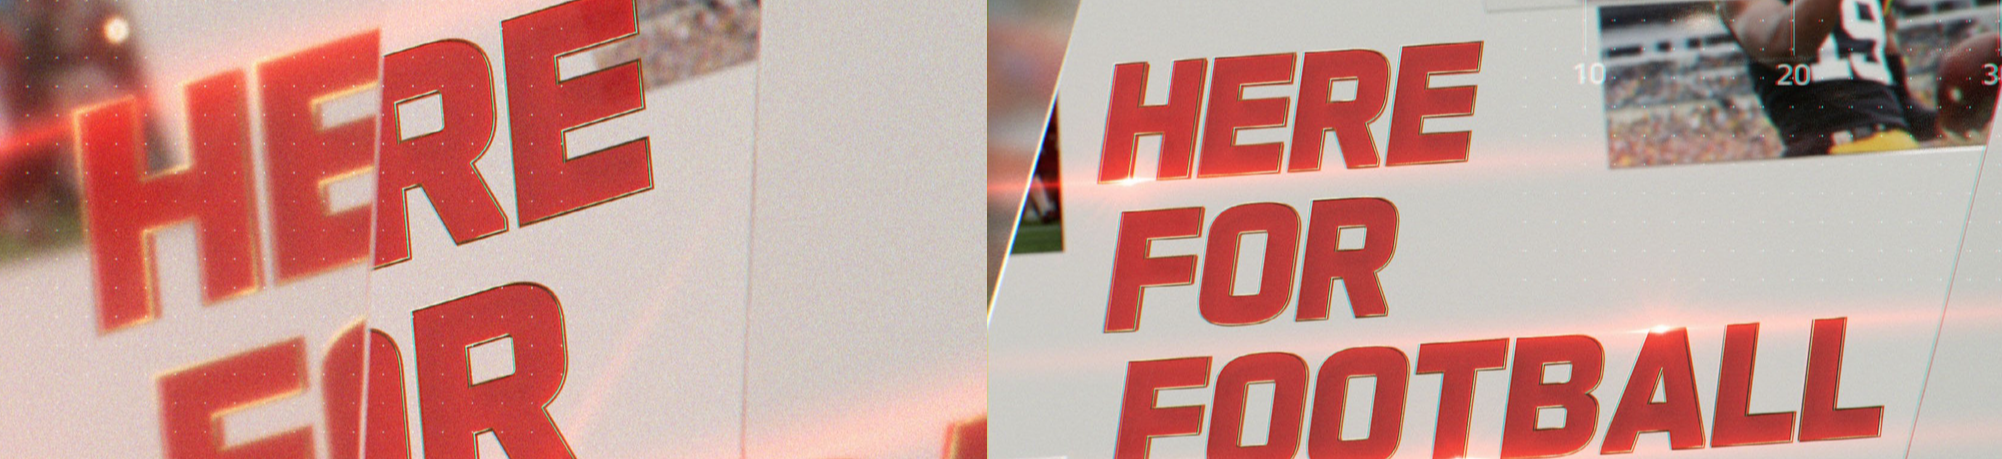 HFFB Banner Red